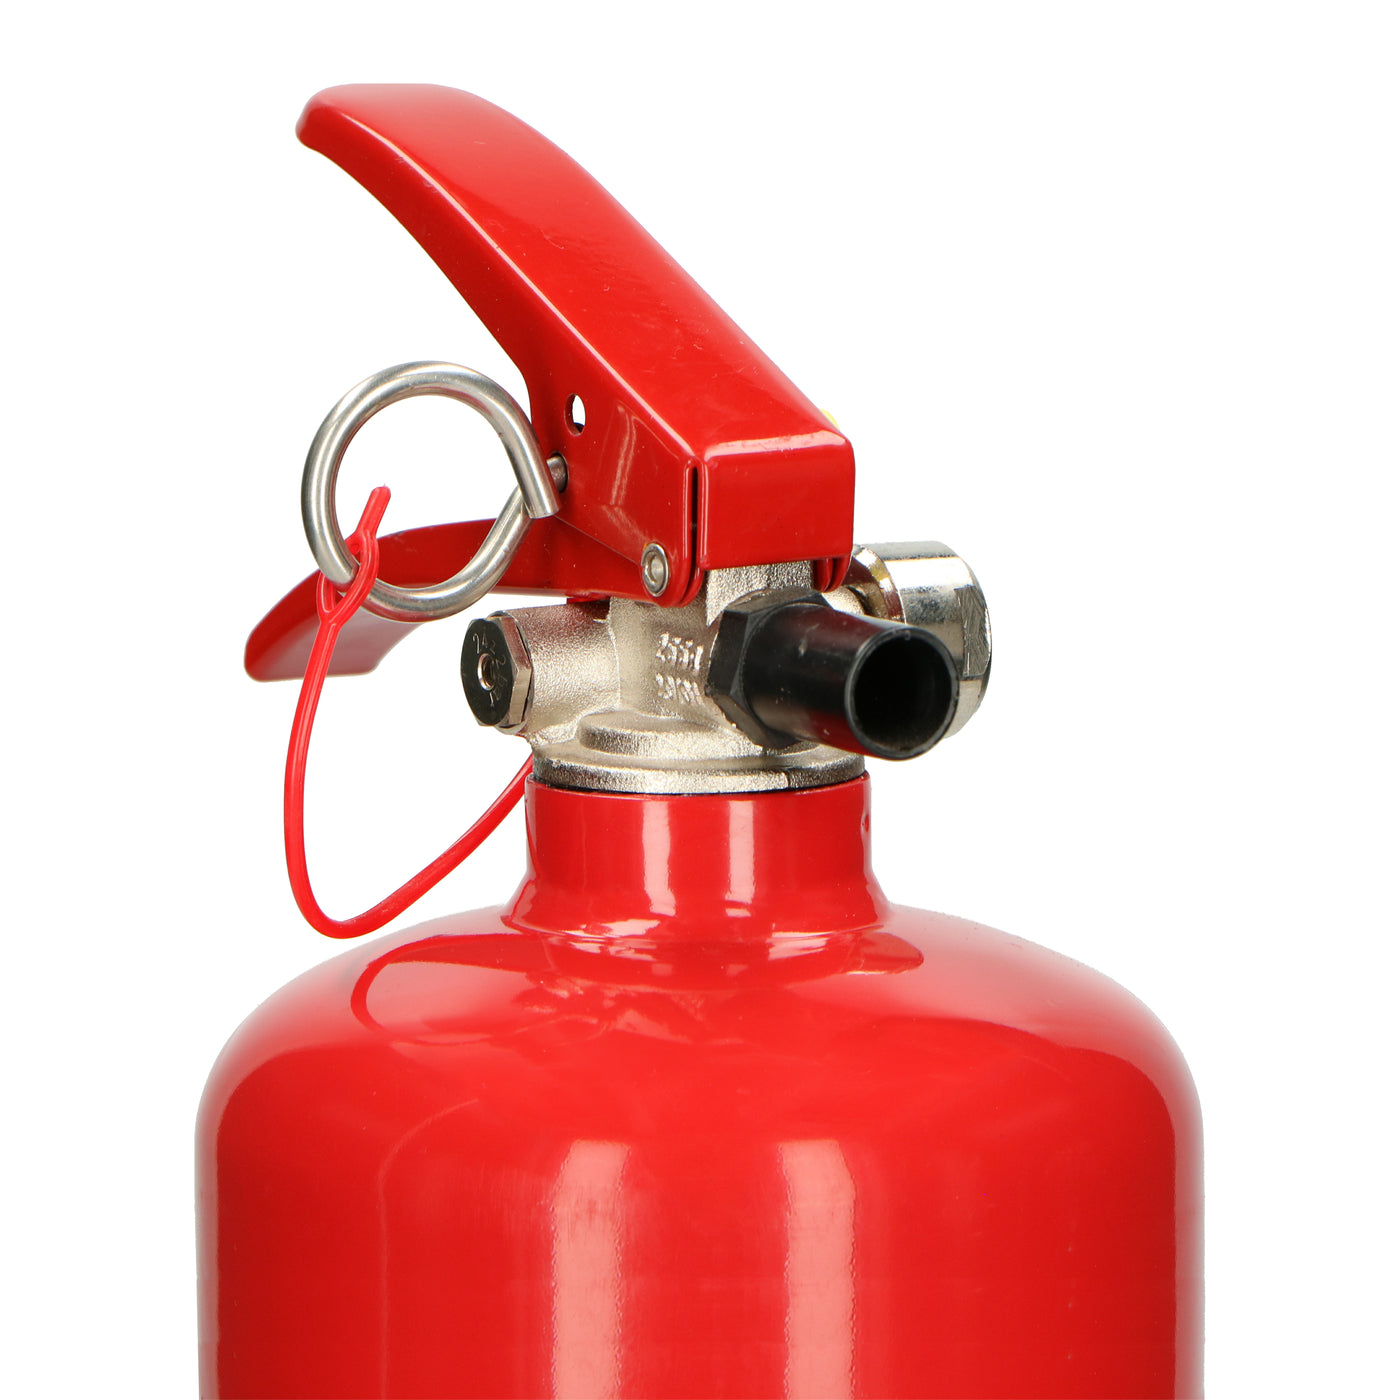 Alecto BP2 - Fire extinguisher powder 2 kilogram